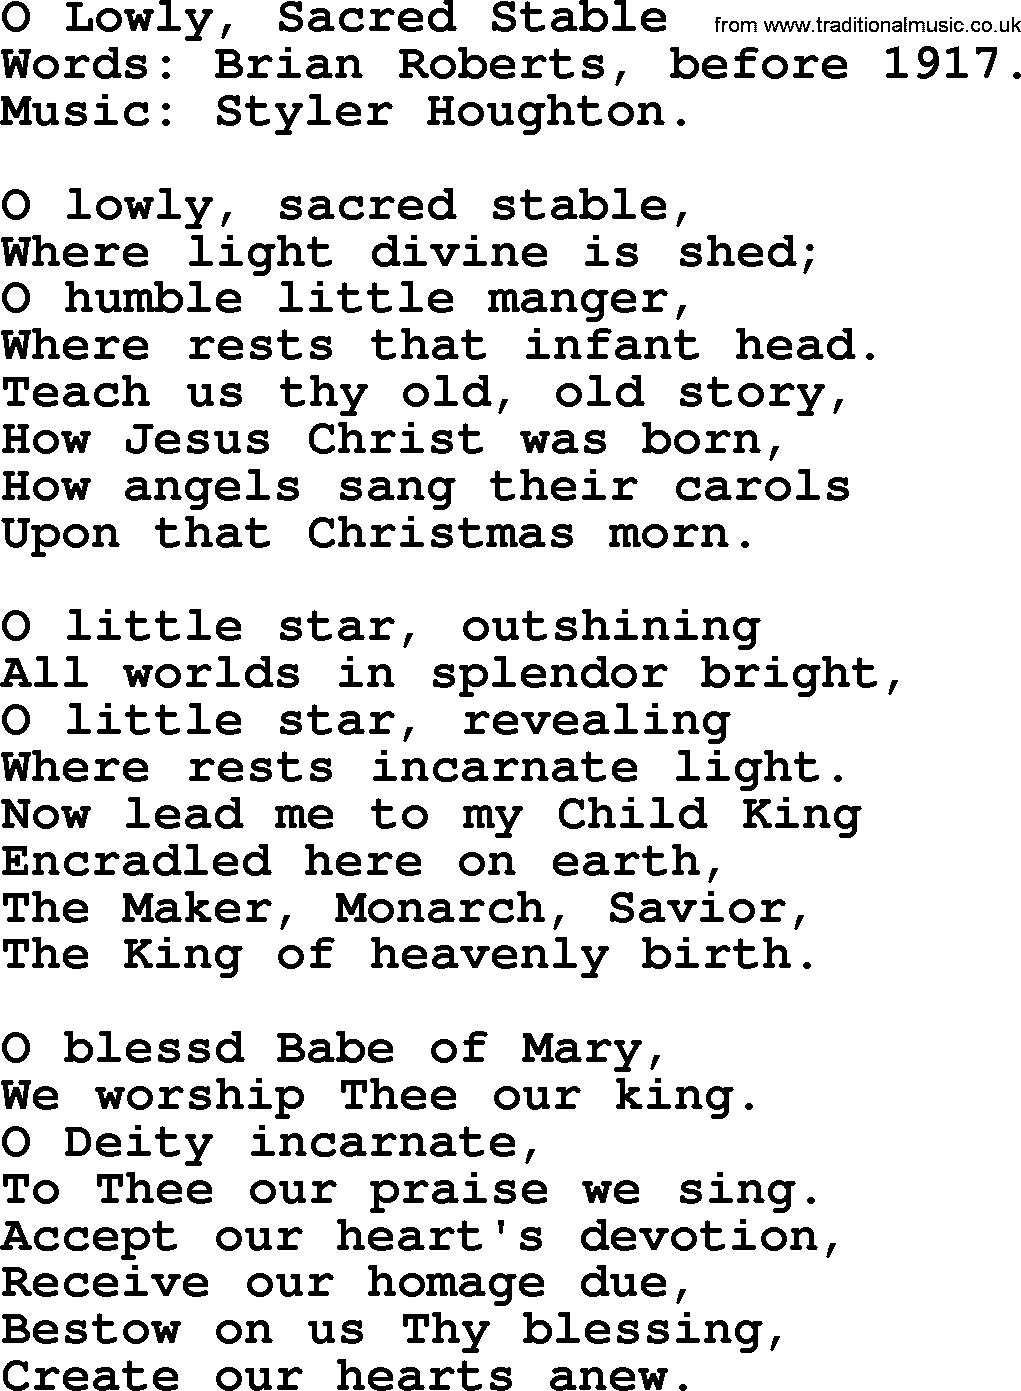 Christmas Hymns, Carols and Songs, title: O Lowly, Sacred Stable, lyrics with PDF